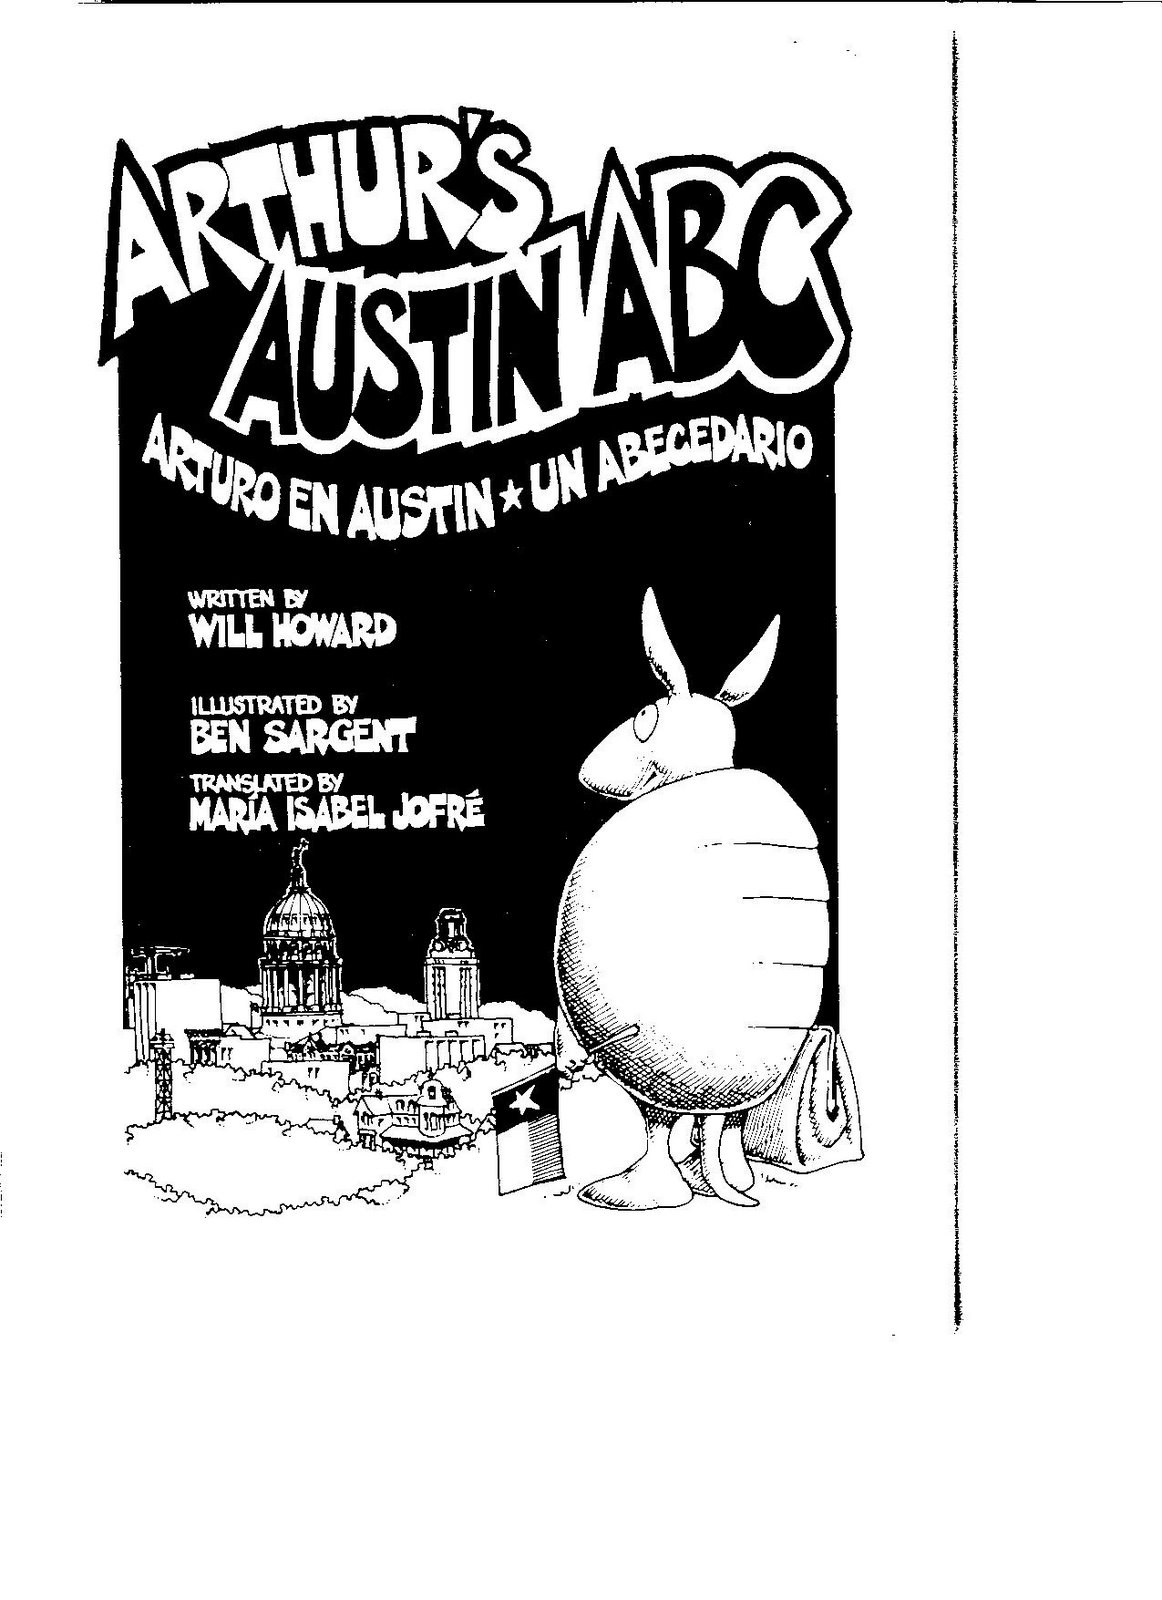 Will's bilingual "Arthur's Austin ABC"